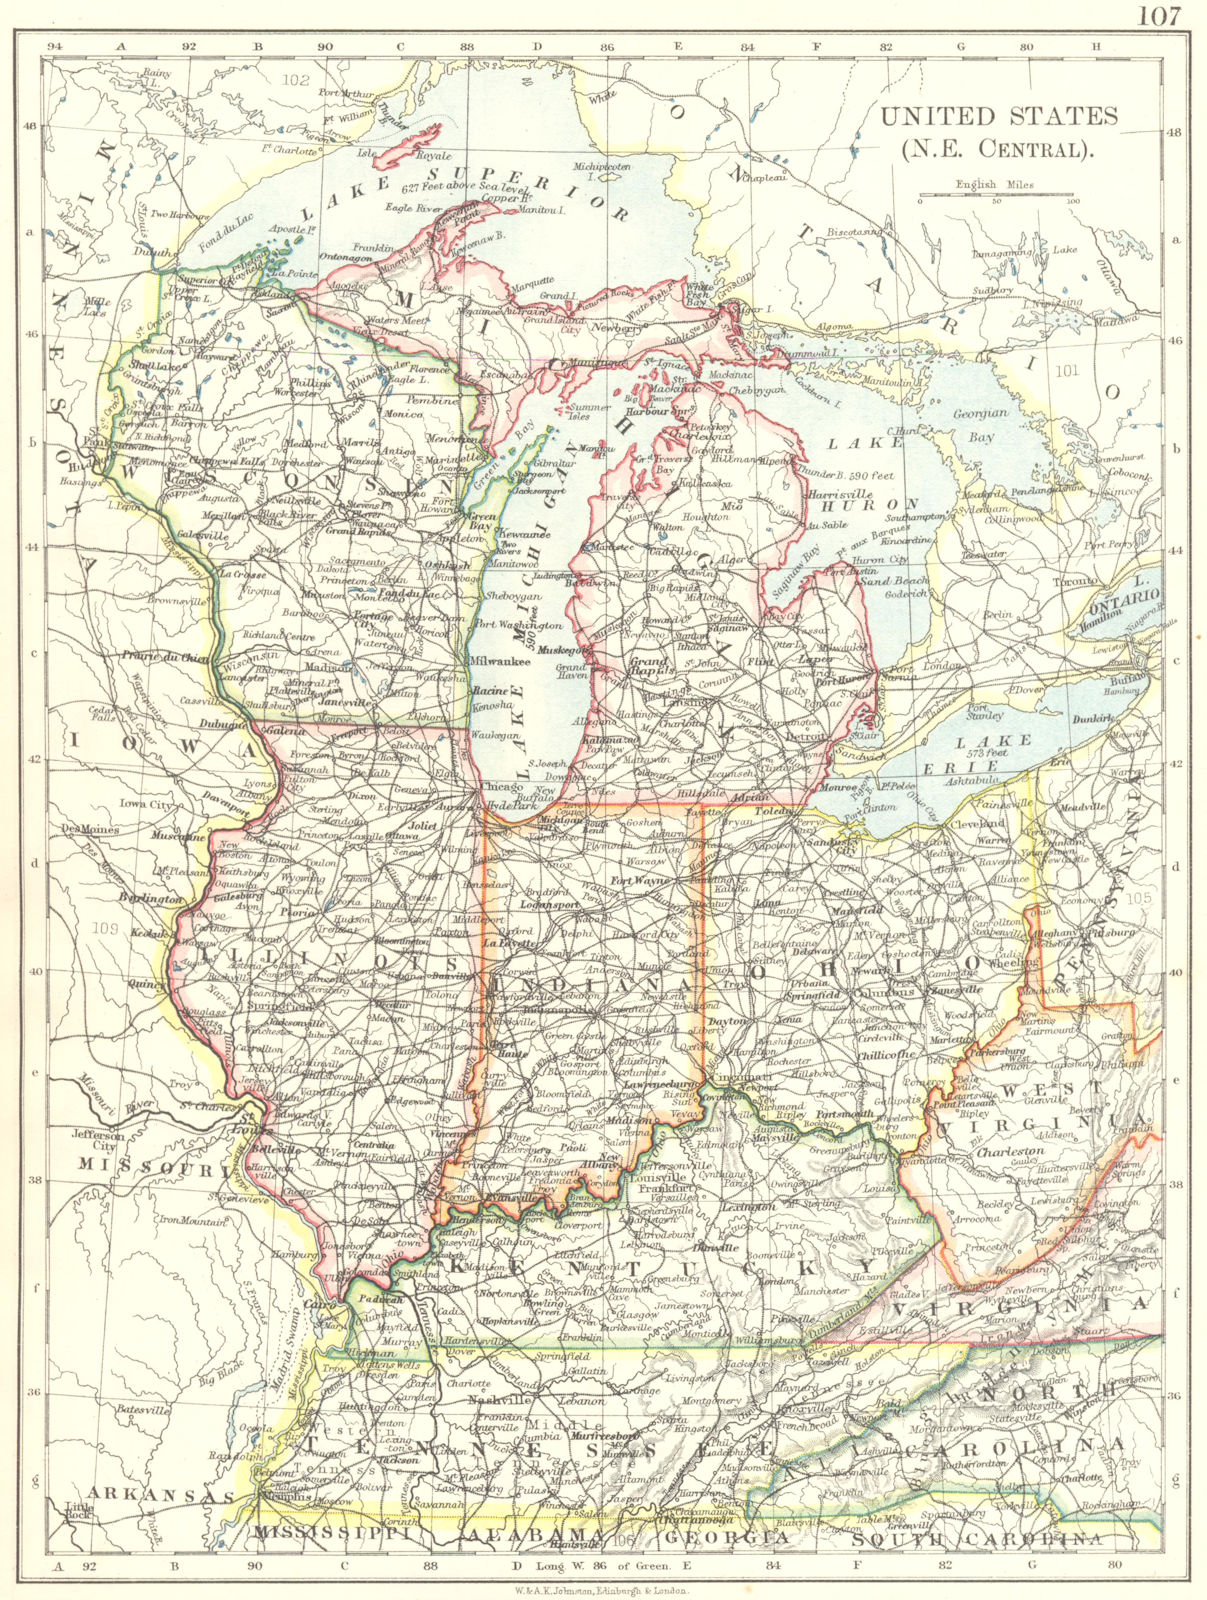 USA MID WEST. Wisconsin Michigan Illinois Ohio Indiana Kentucky TN 1899 map